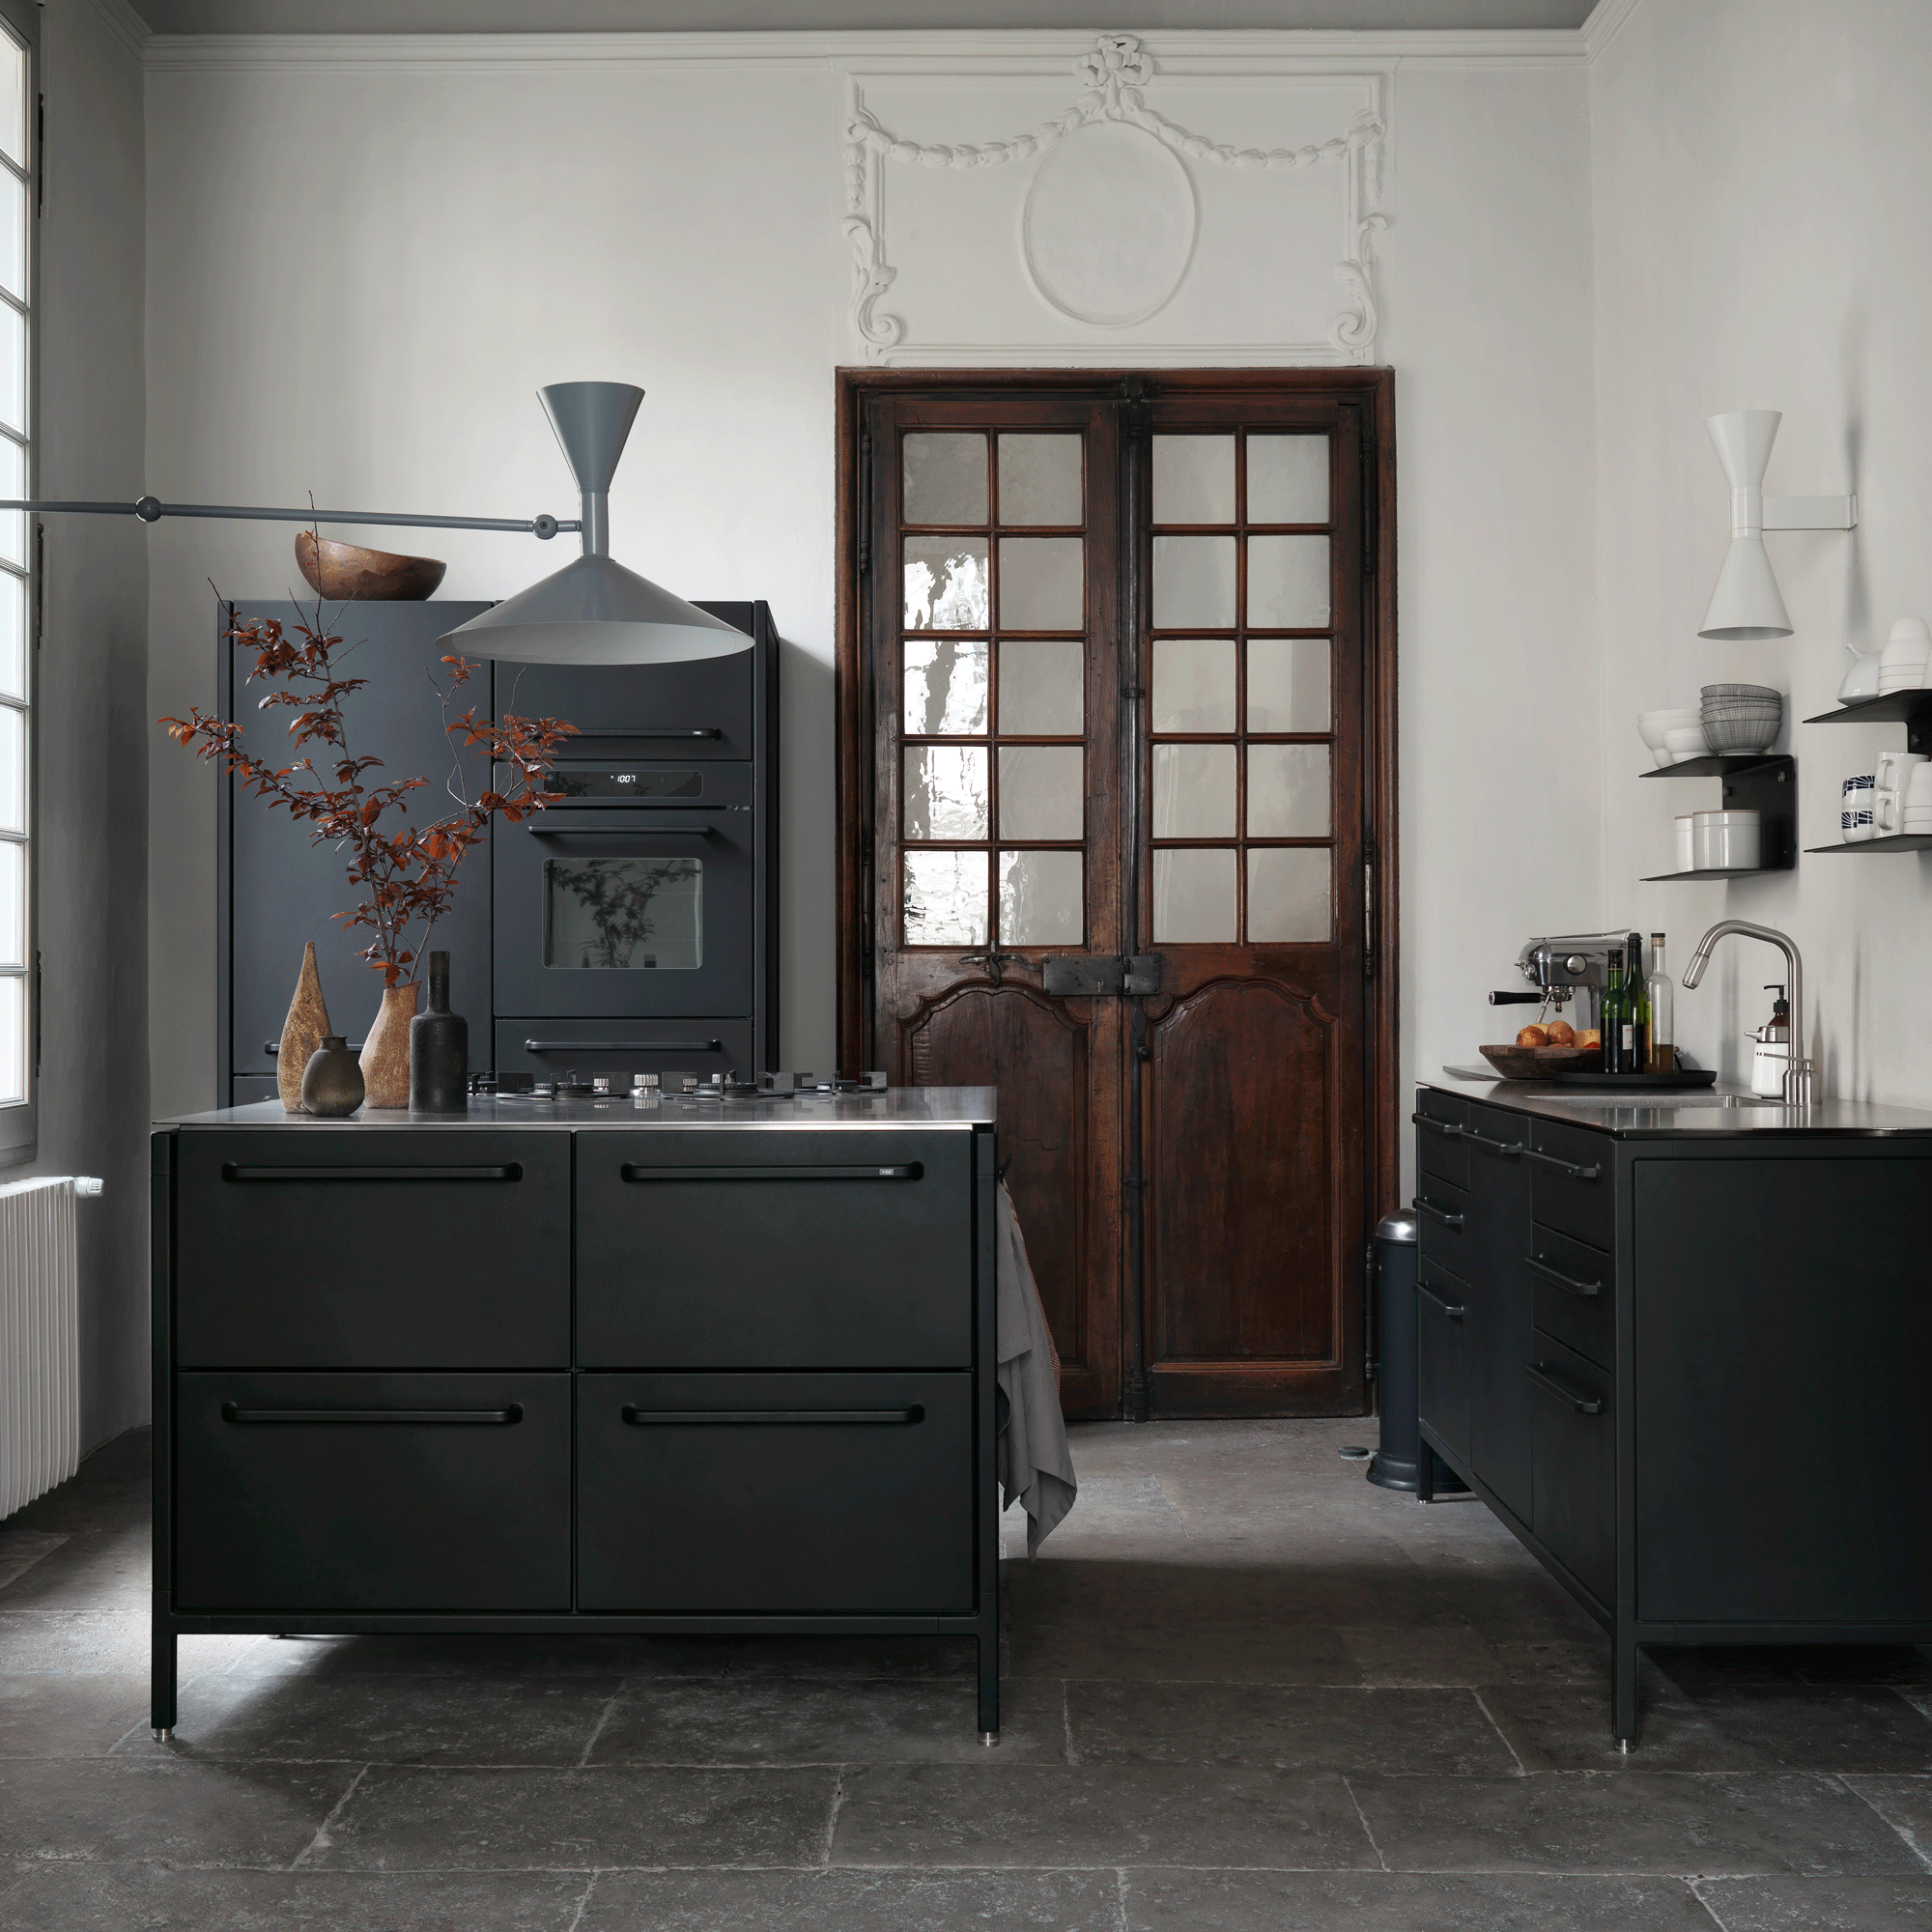 black freestanding kitchen with large task llight